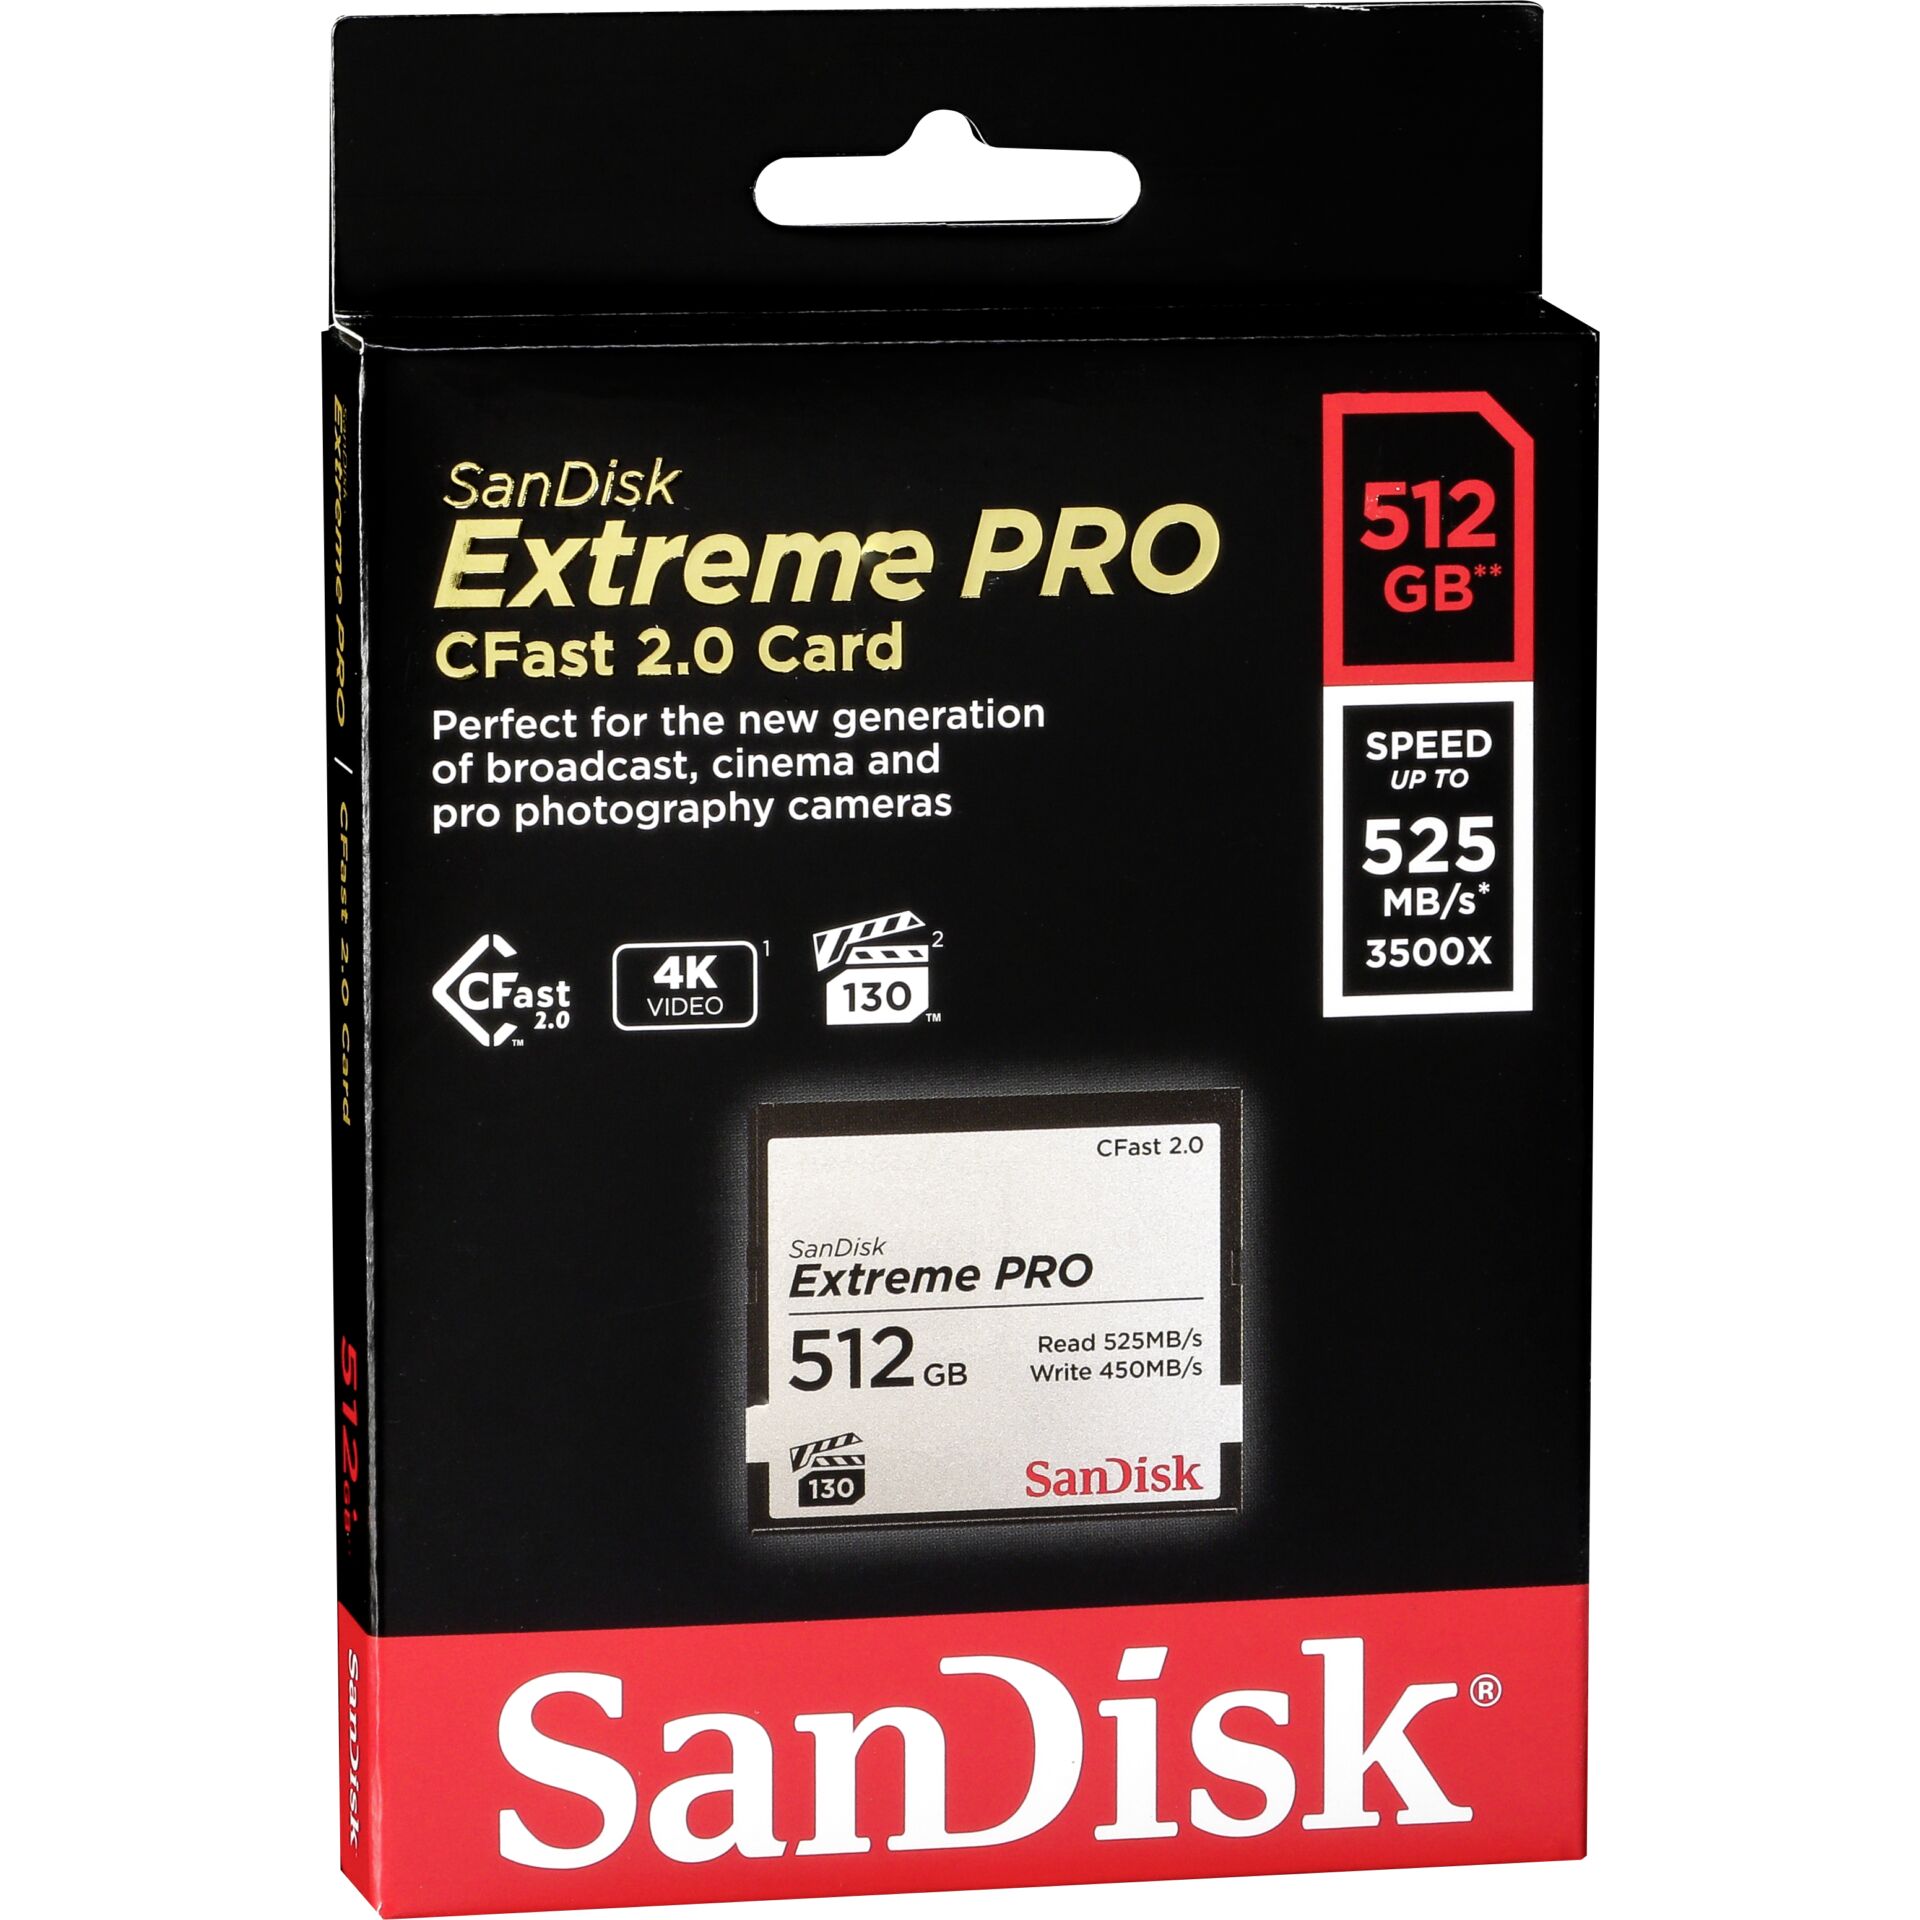 SanDisk CFAST 2.0 VPG130   512GB Extreme Pro     SDCFSP-512G